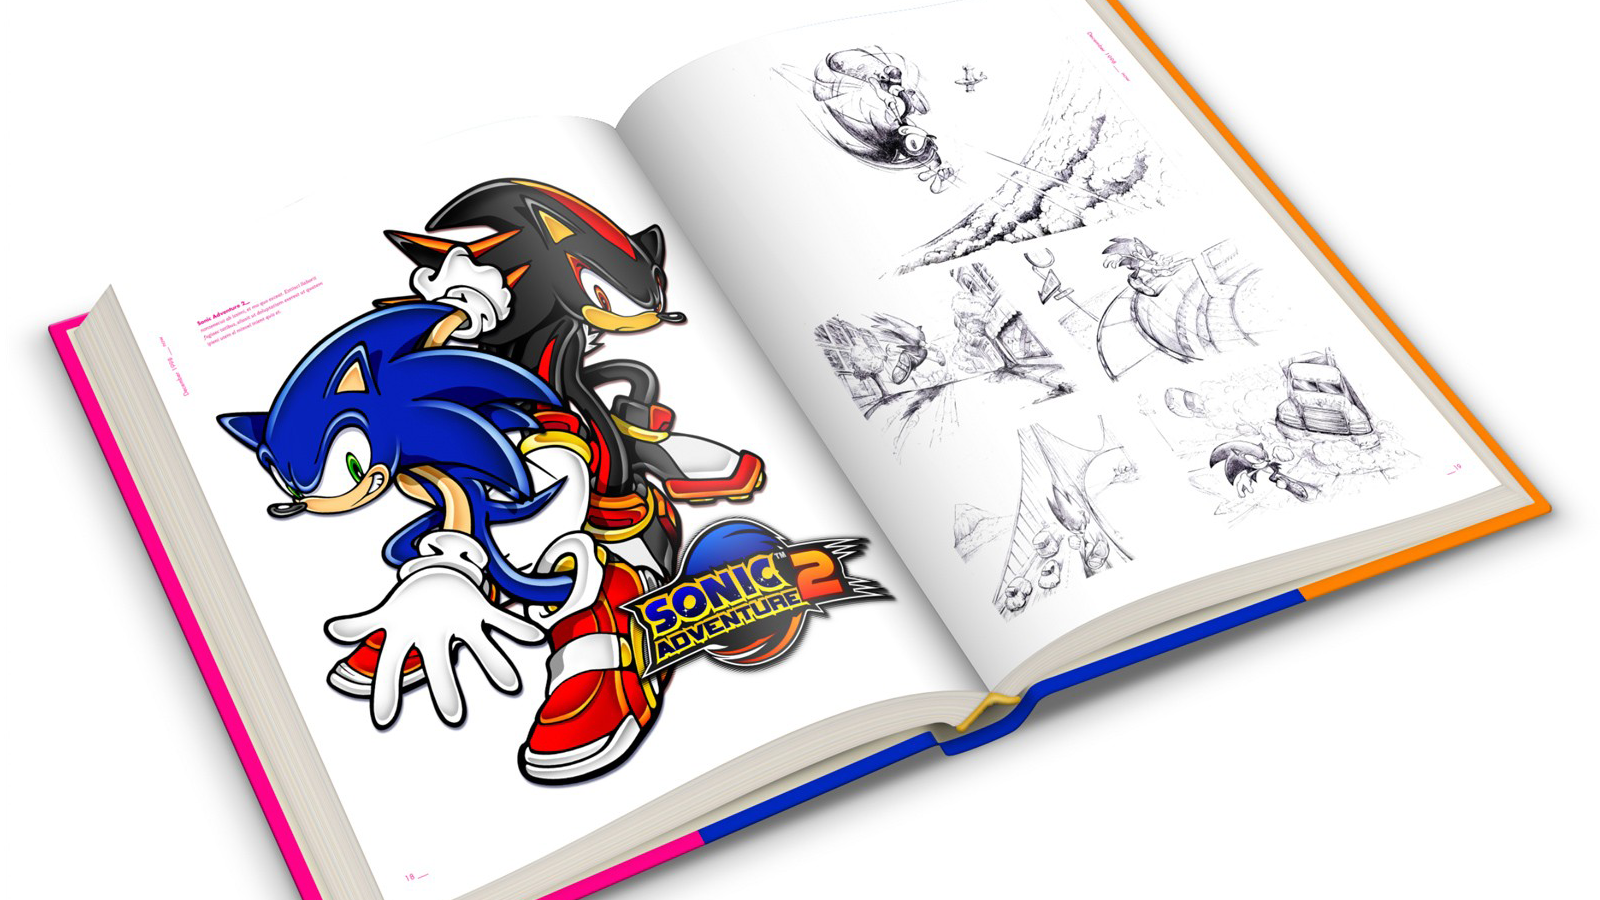 “Sonic the hedgehog: 25 anniversary art book”